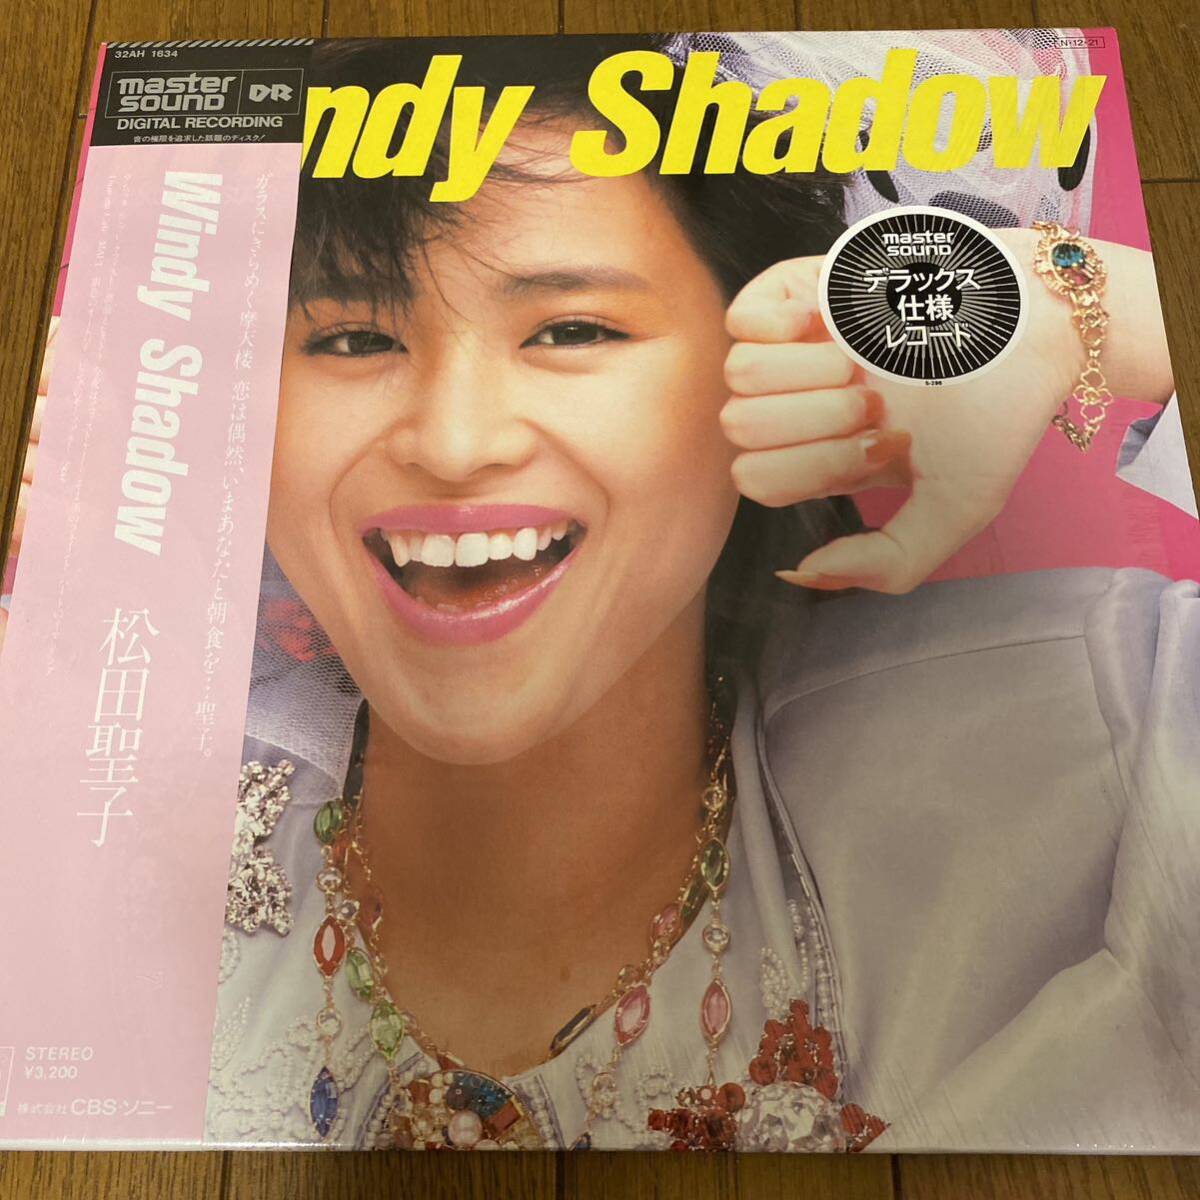 Windy Shadow 松田聖子 帯付LP マスターサウンド盤の画像1